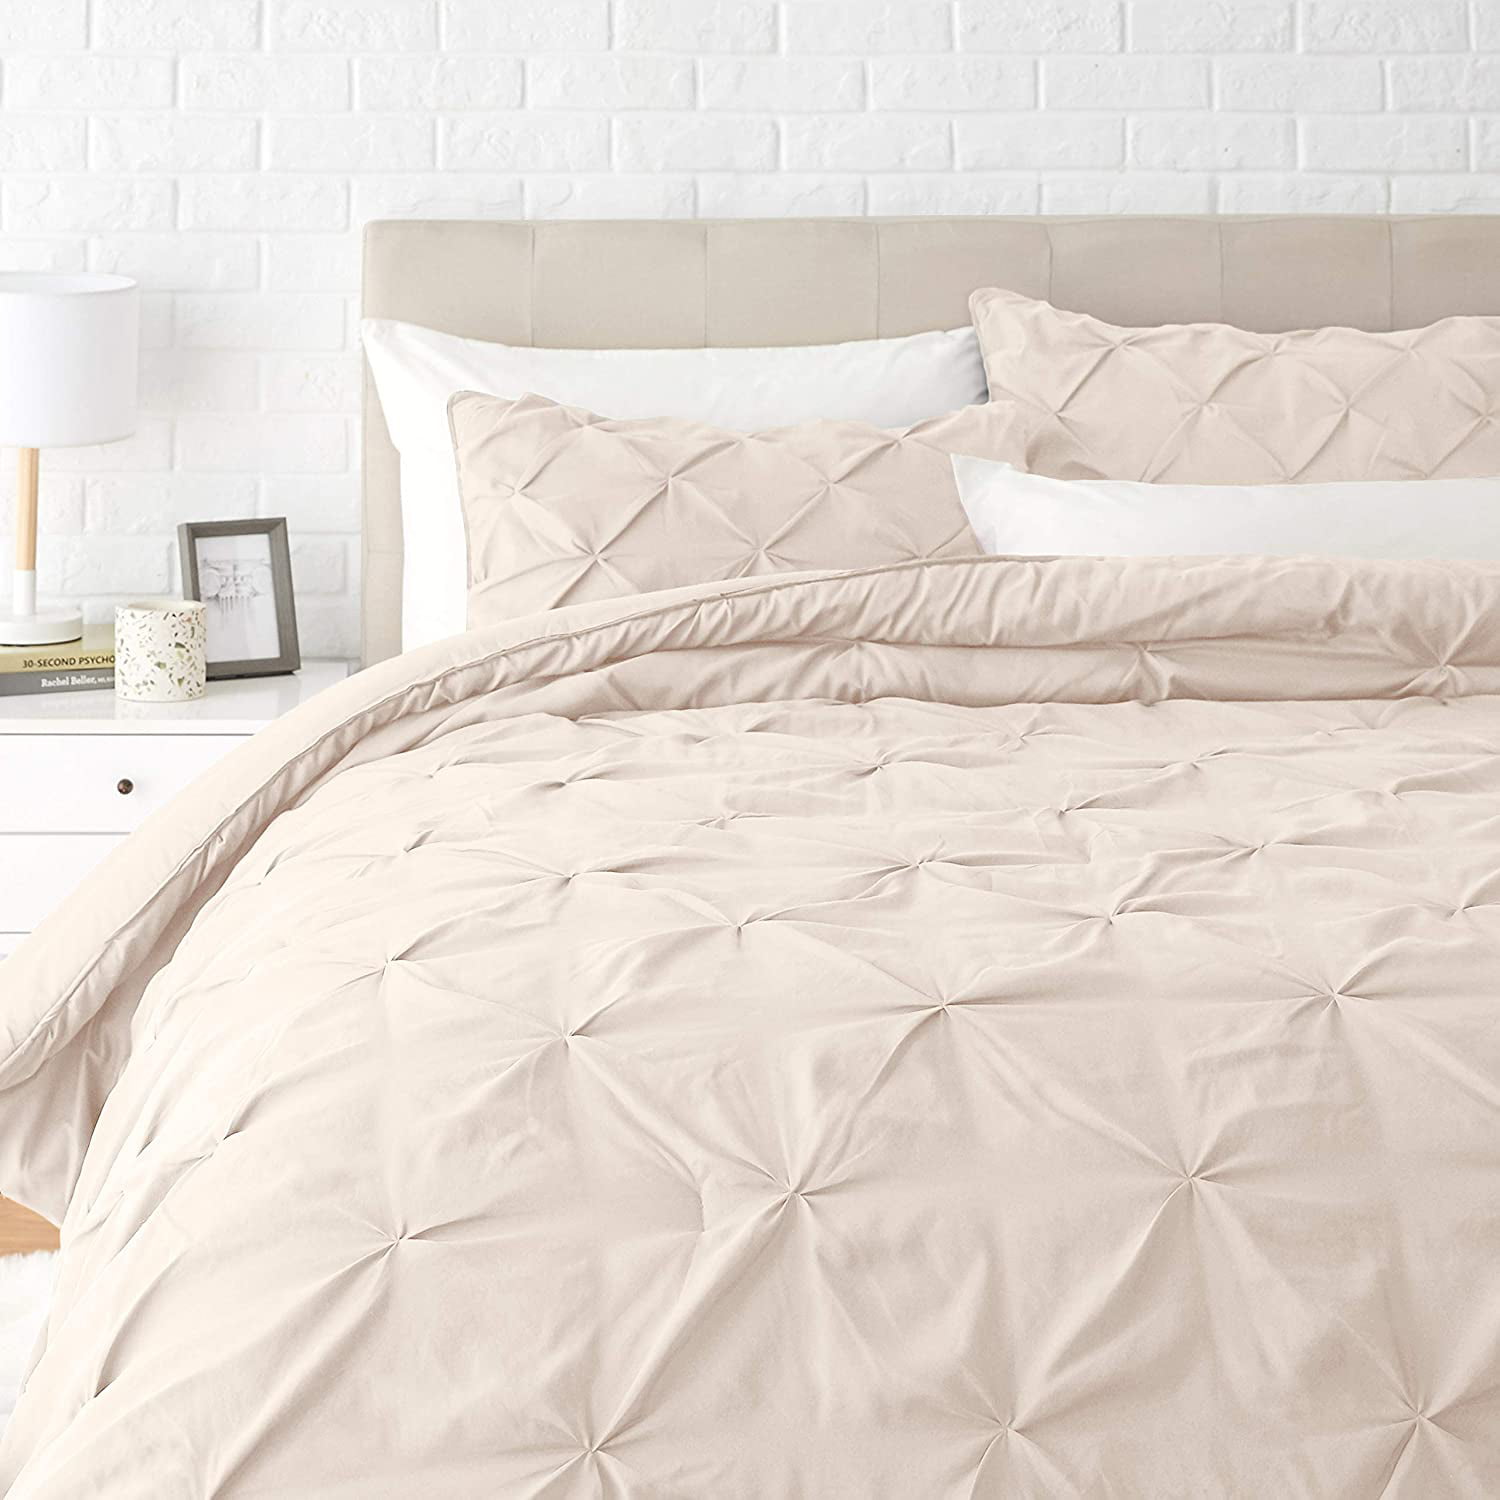 Basics Pinch Pleat Down-Alternative Comforter Bedding Set Beige King 